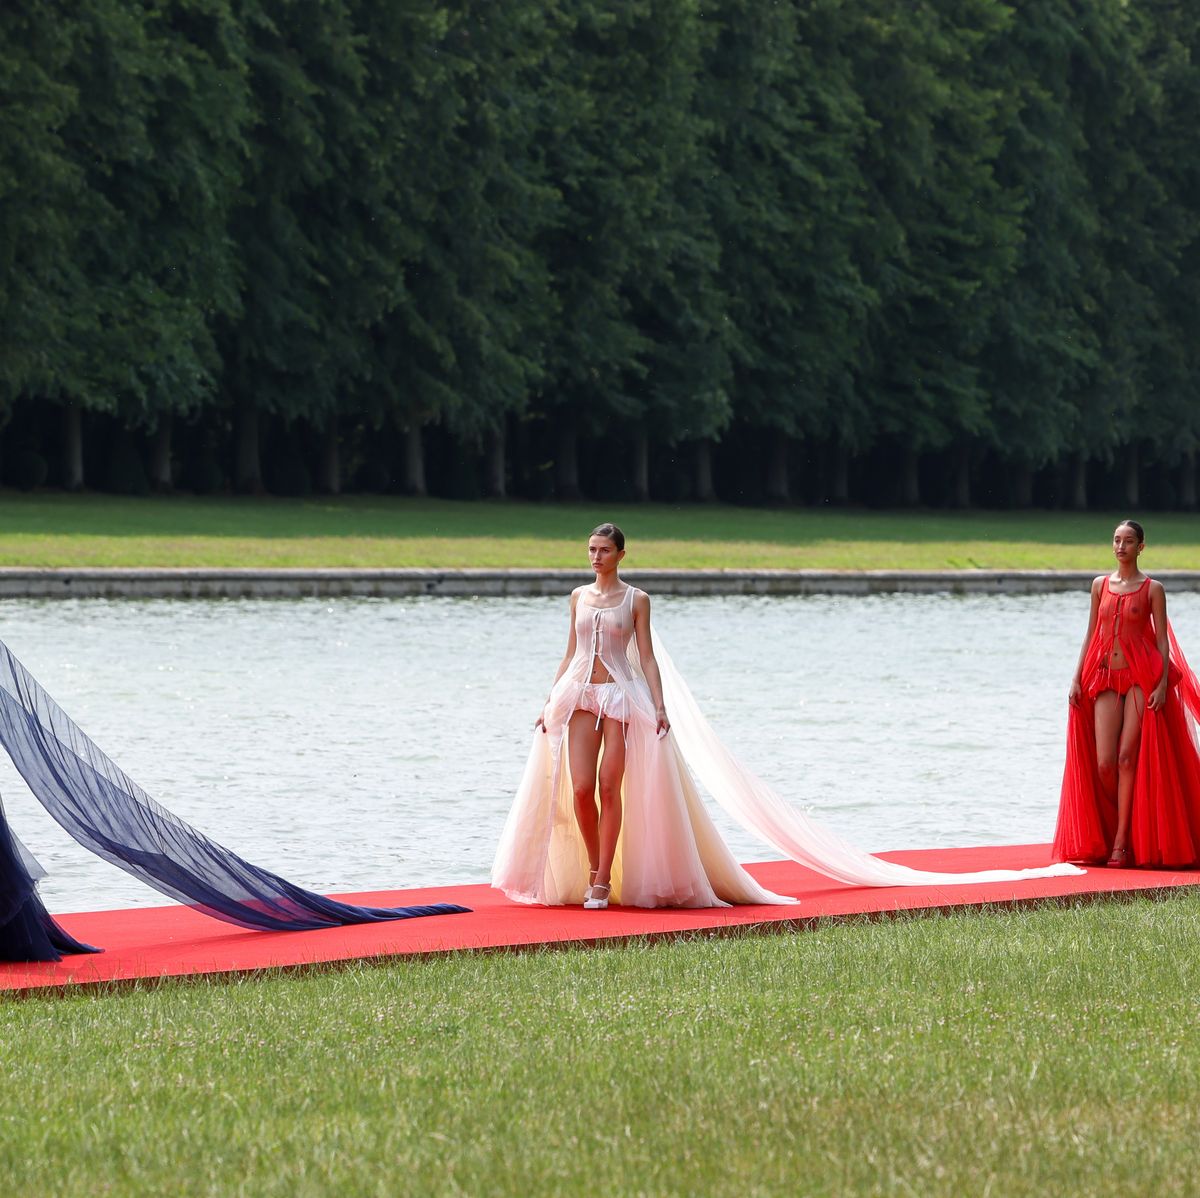 Jacquemus' Versailles show was an ode to Princess Diana